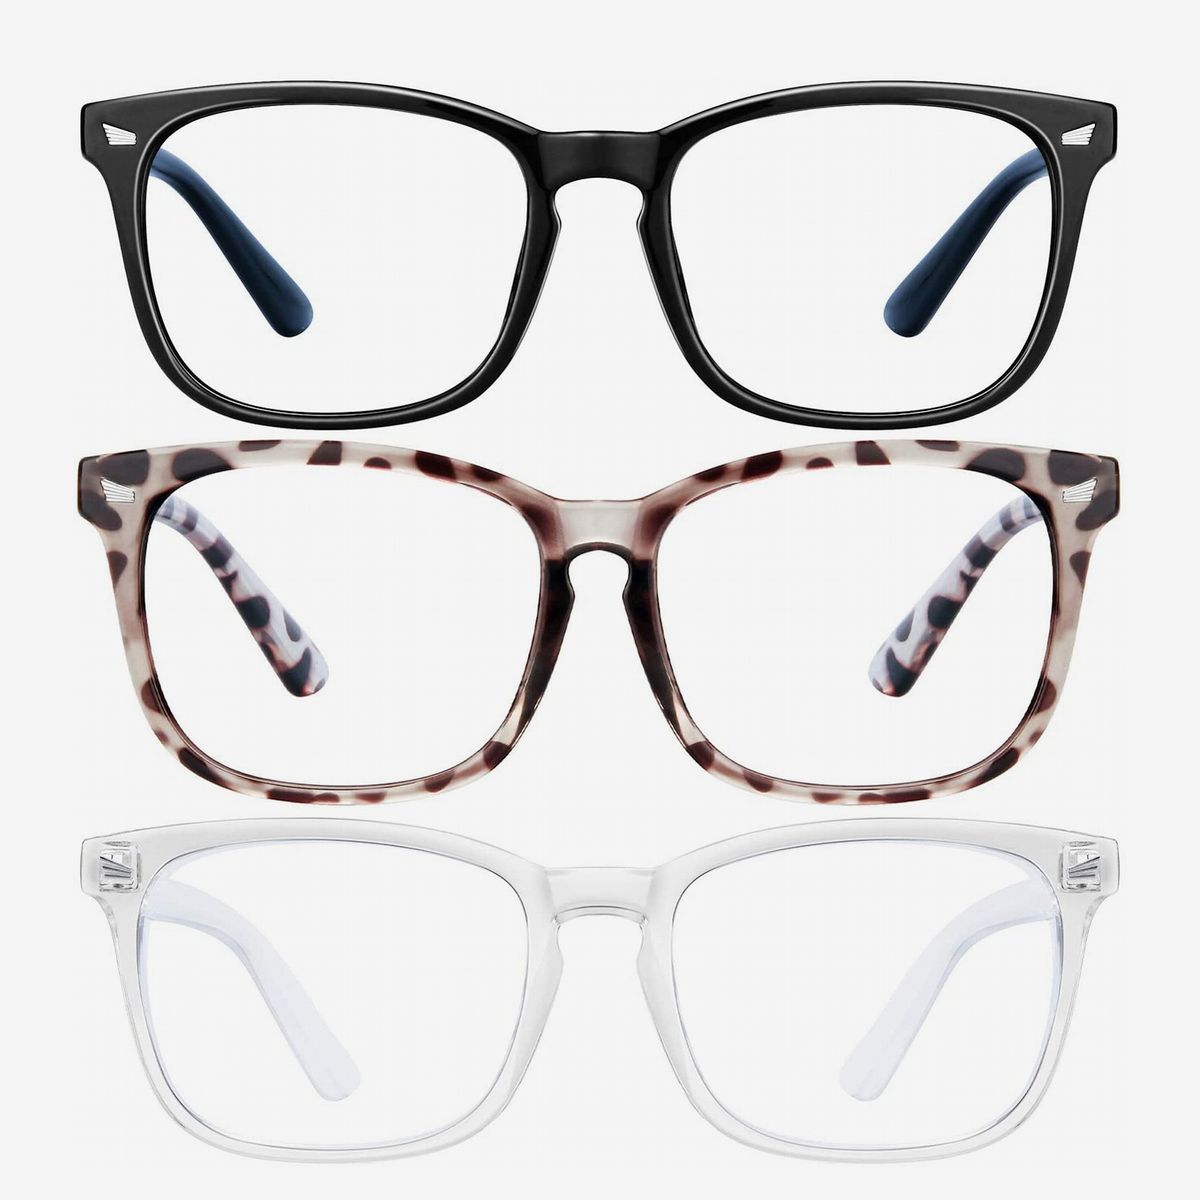 anti blue light glasses price